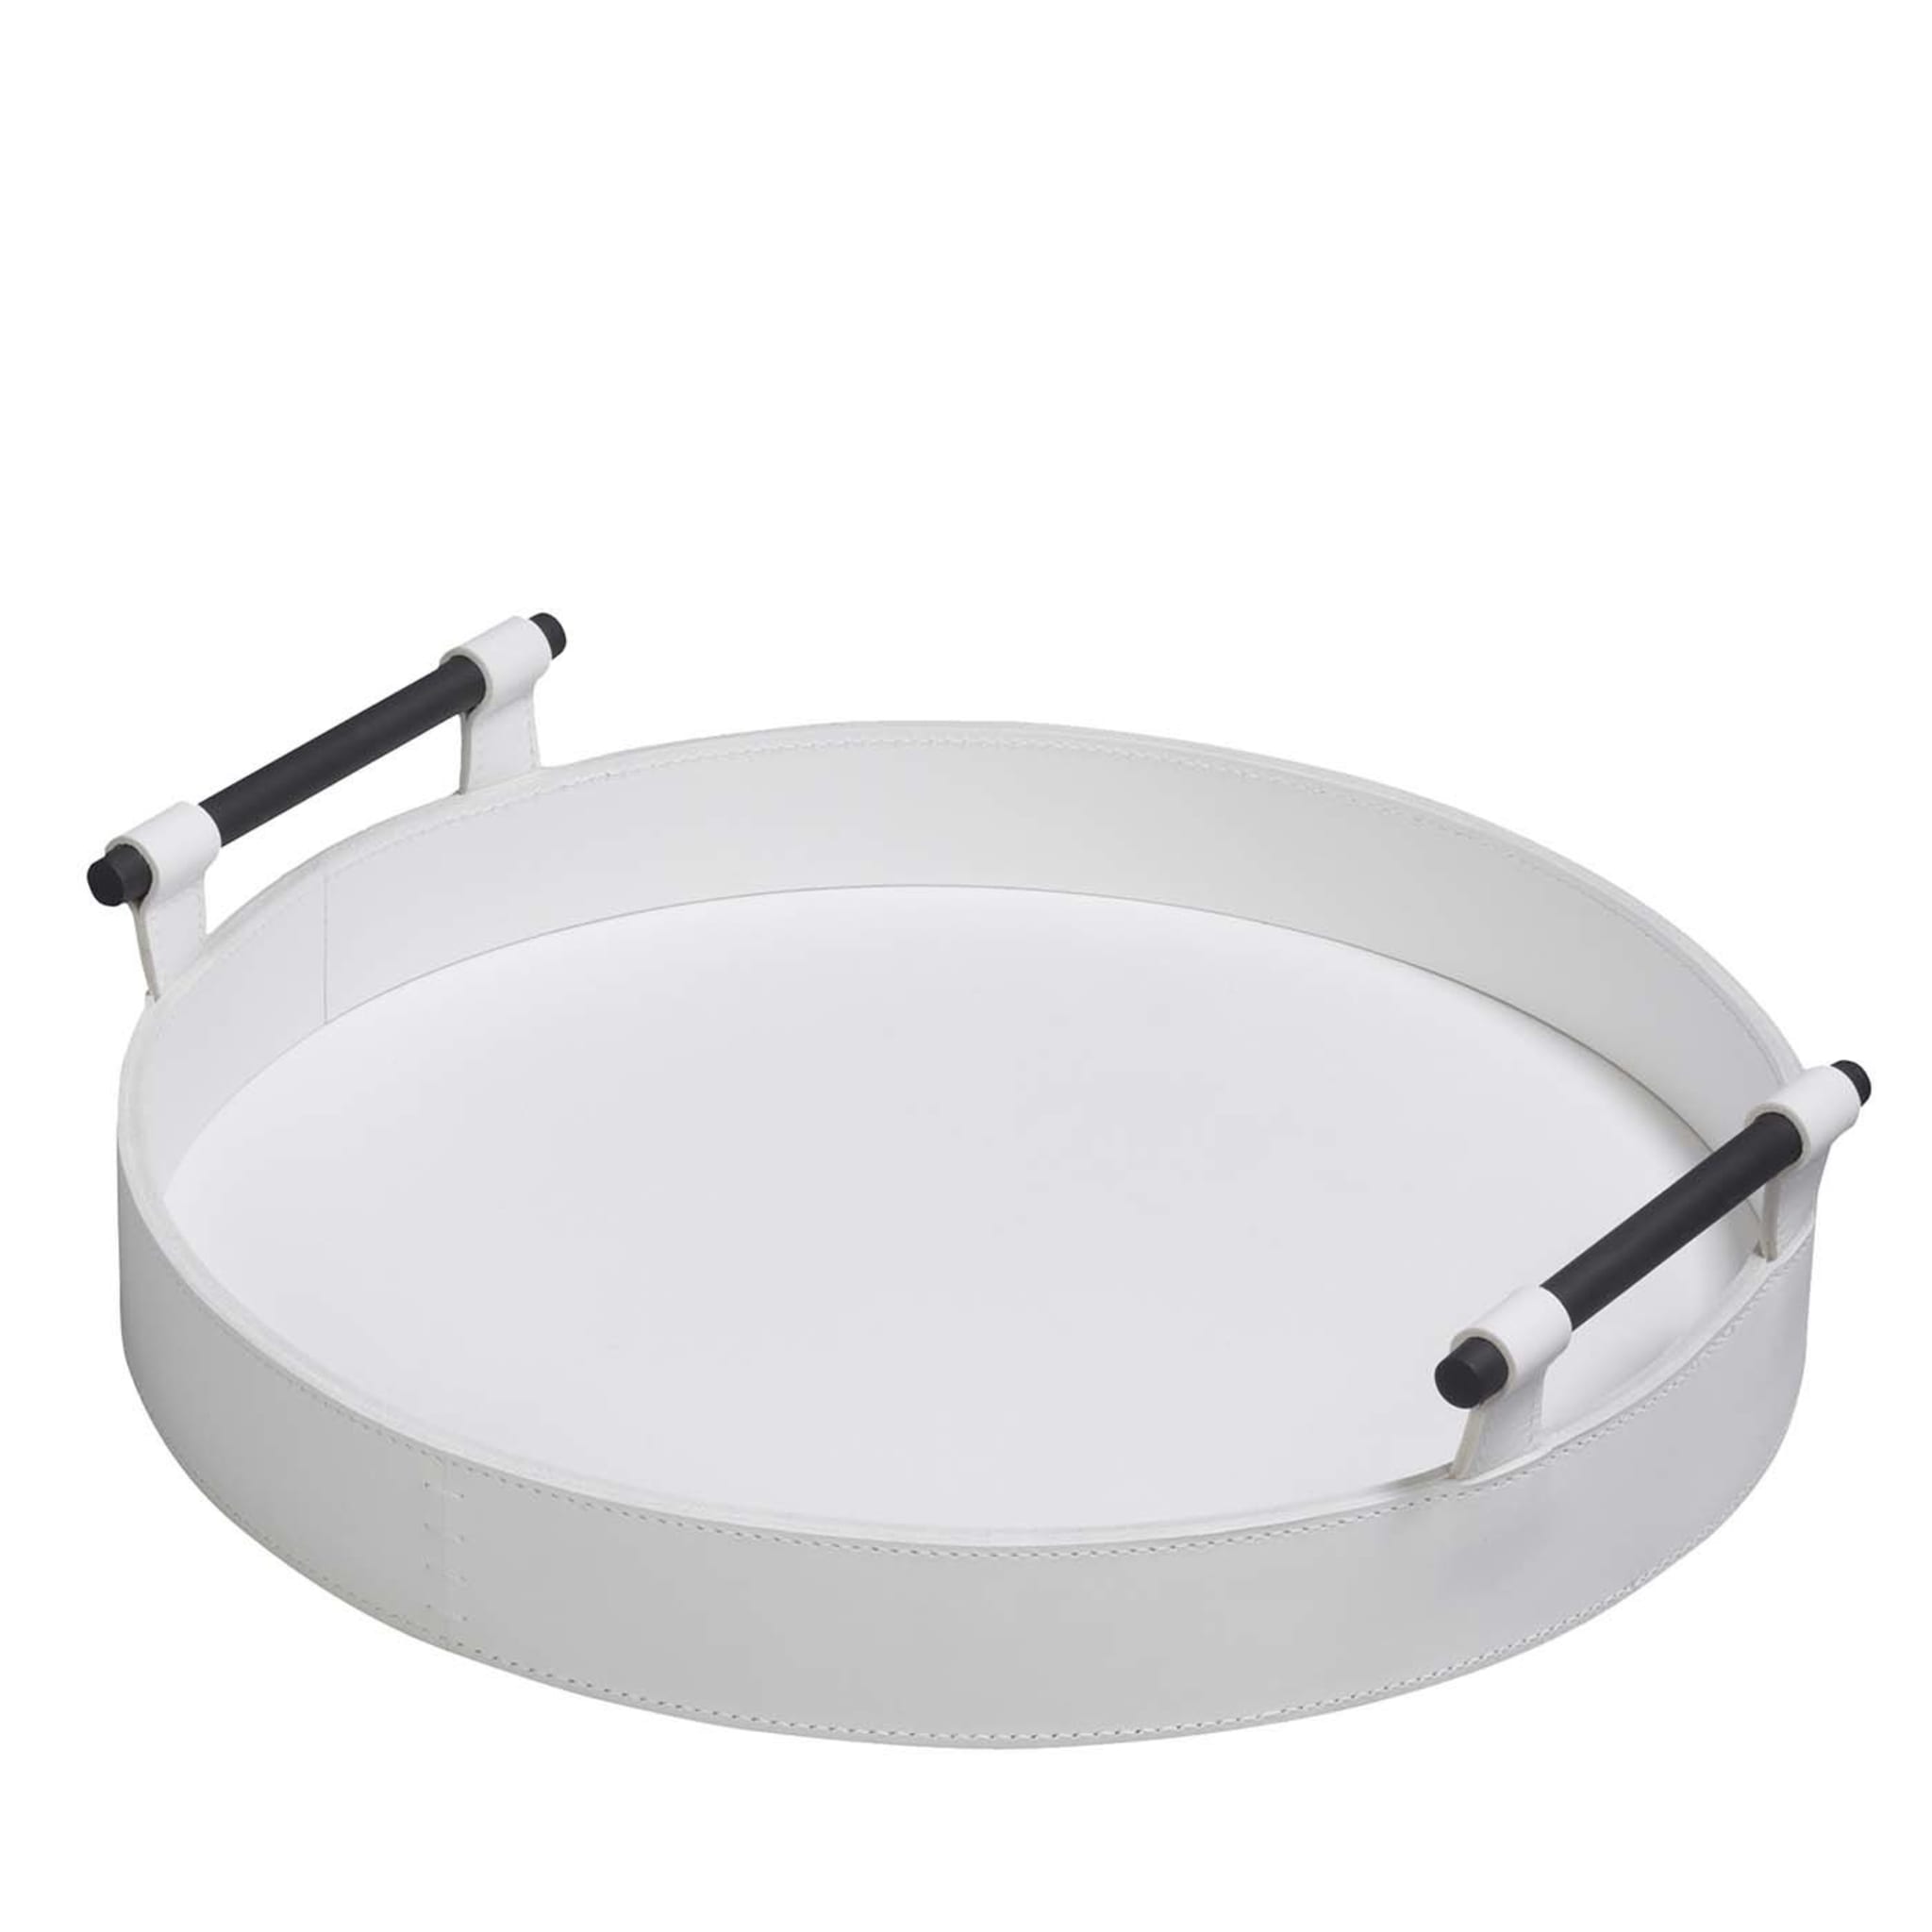 Portofino Small Round Tray in White Leather - Main view